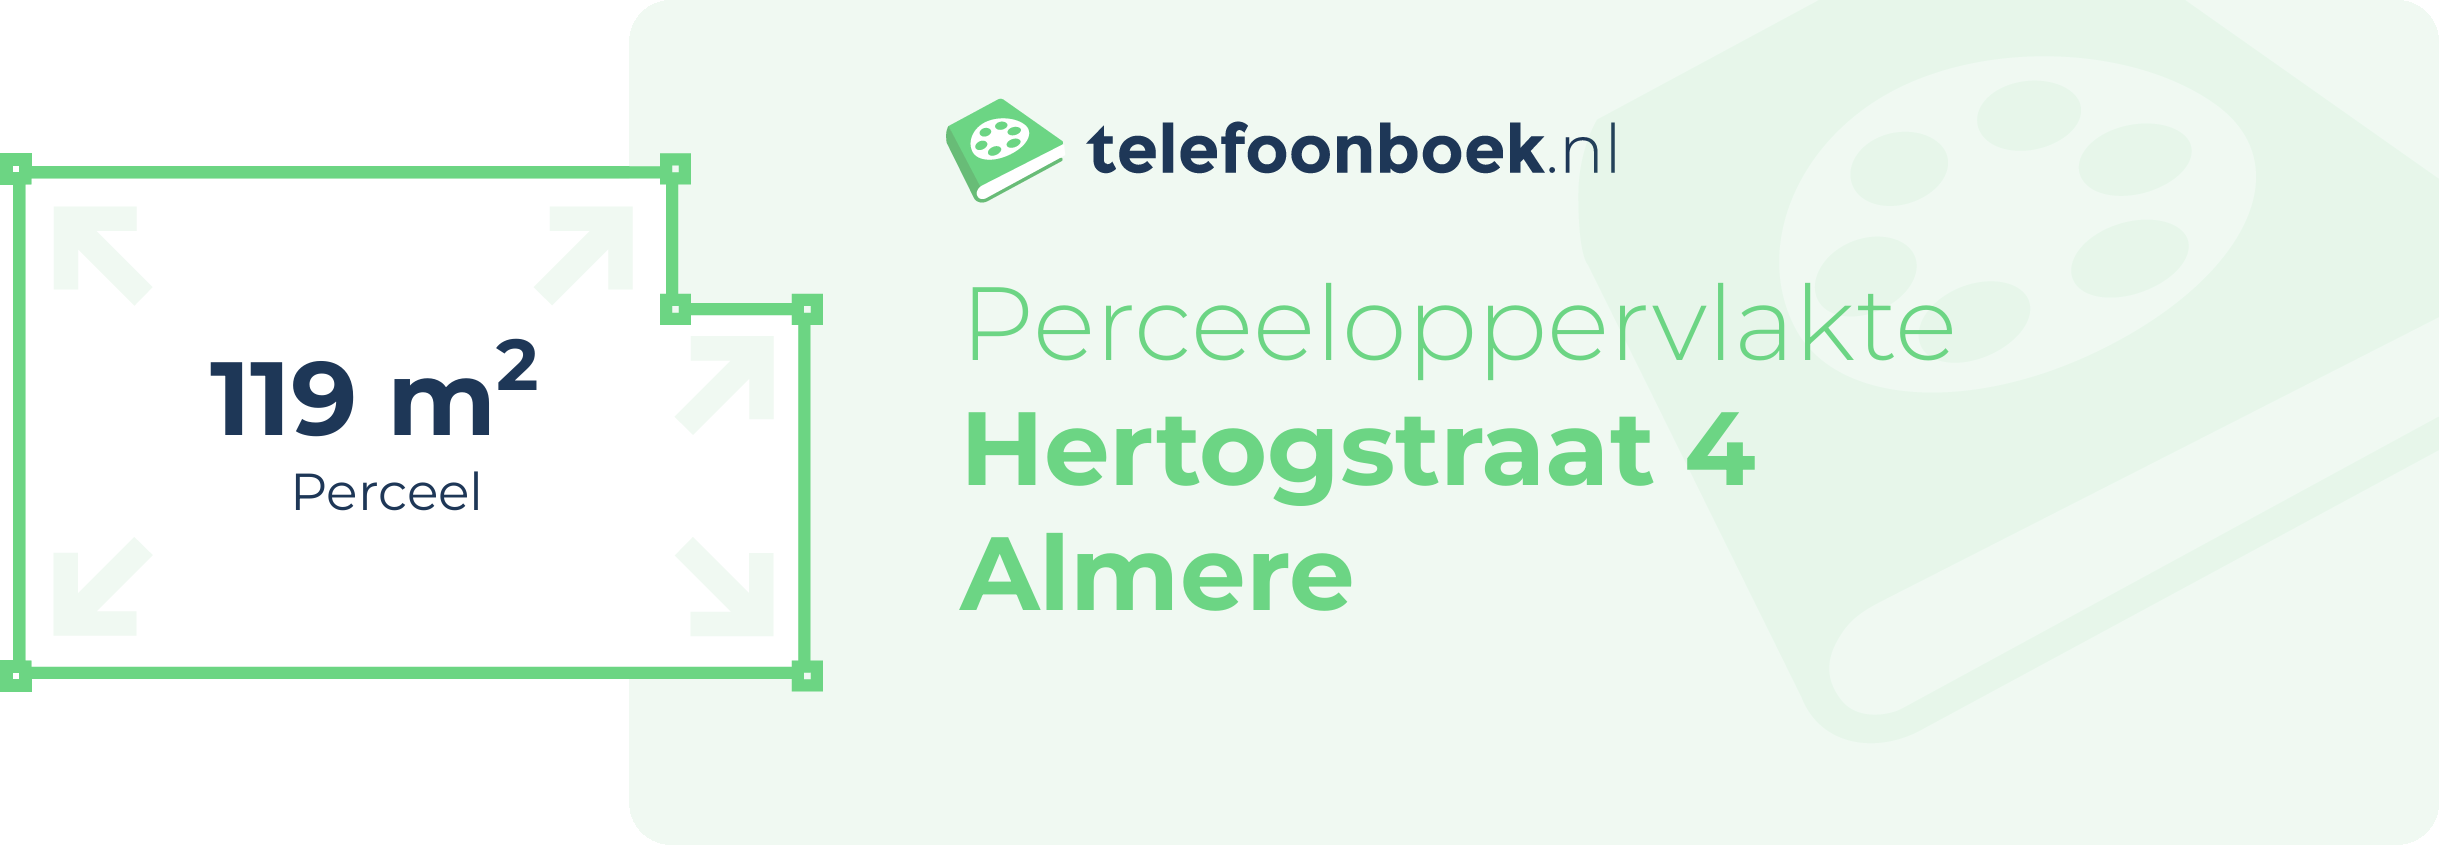 Perceeloppervlakte Hertogstraat 4 Almere